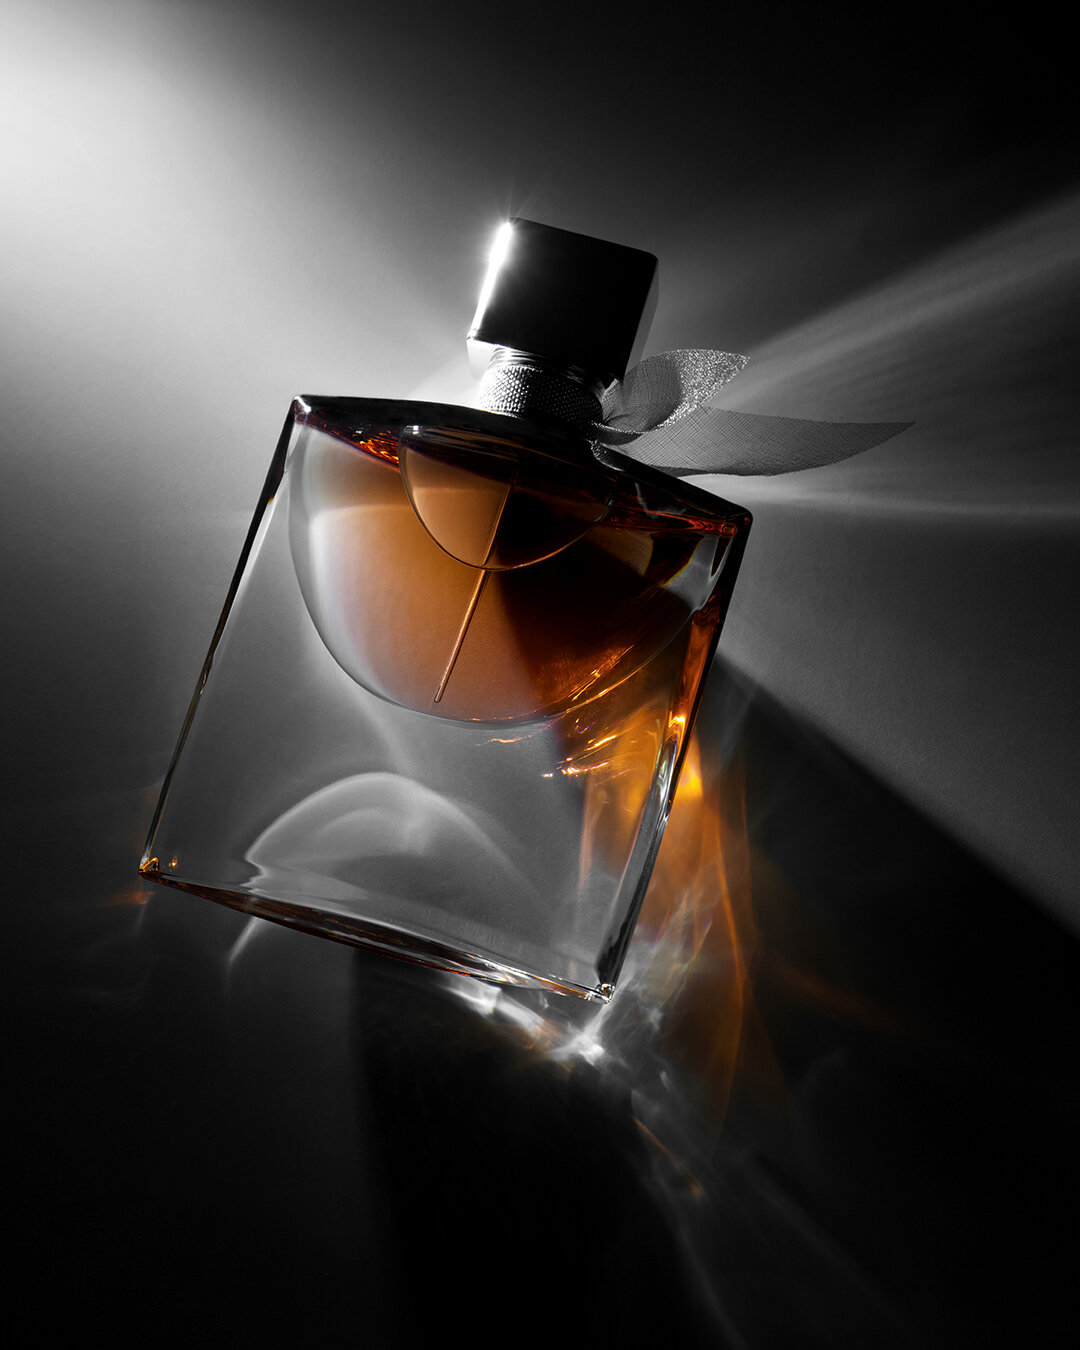 Shooting perfume bottles: 4 hacks for creative high-end product shots